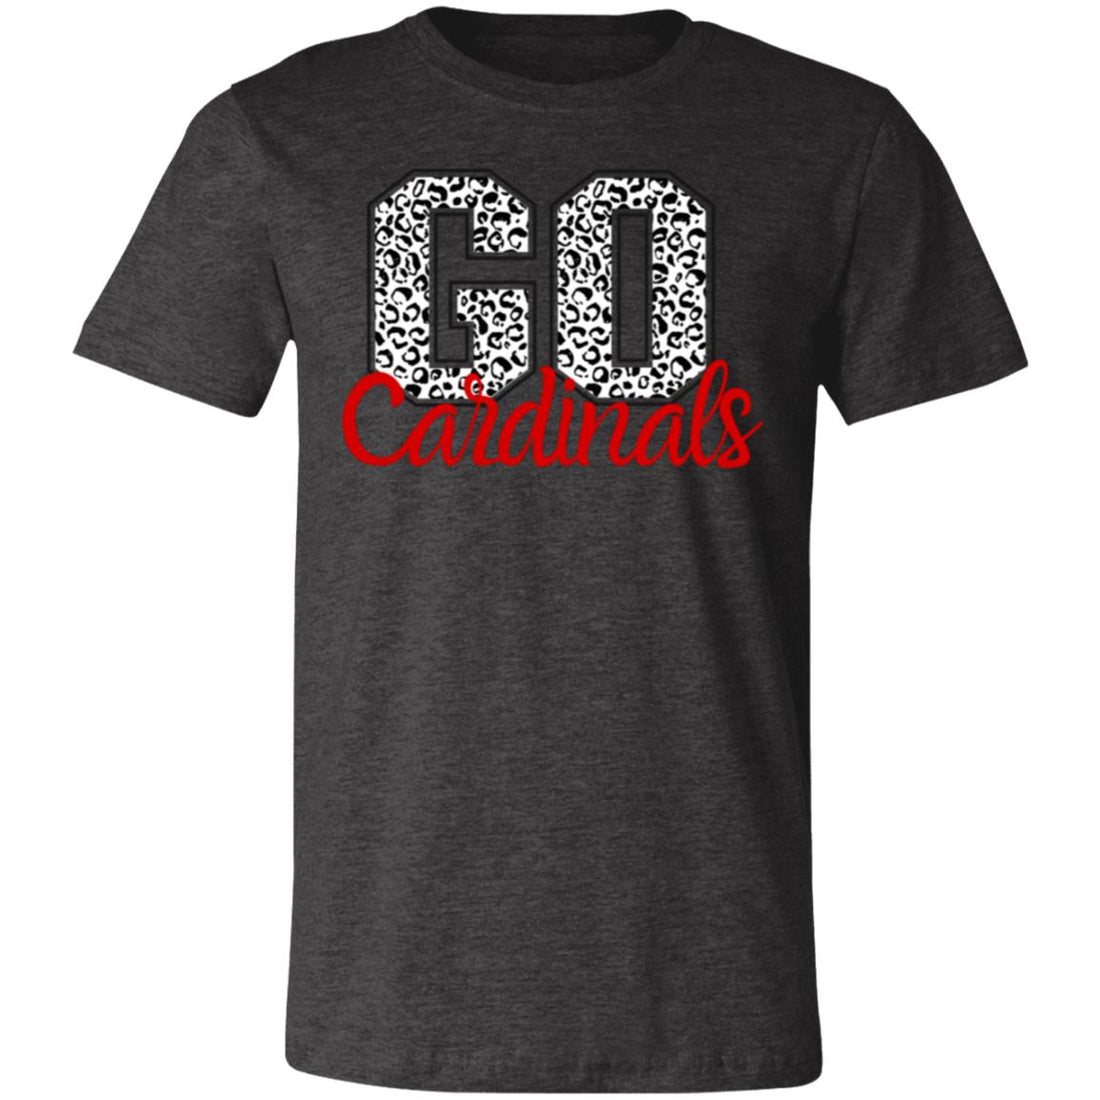 Go Cardinals Print T-Shirt - T-Shirts - Positively Sassy - Go Cardinals Print T-Shirt